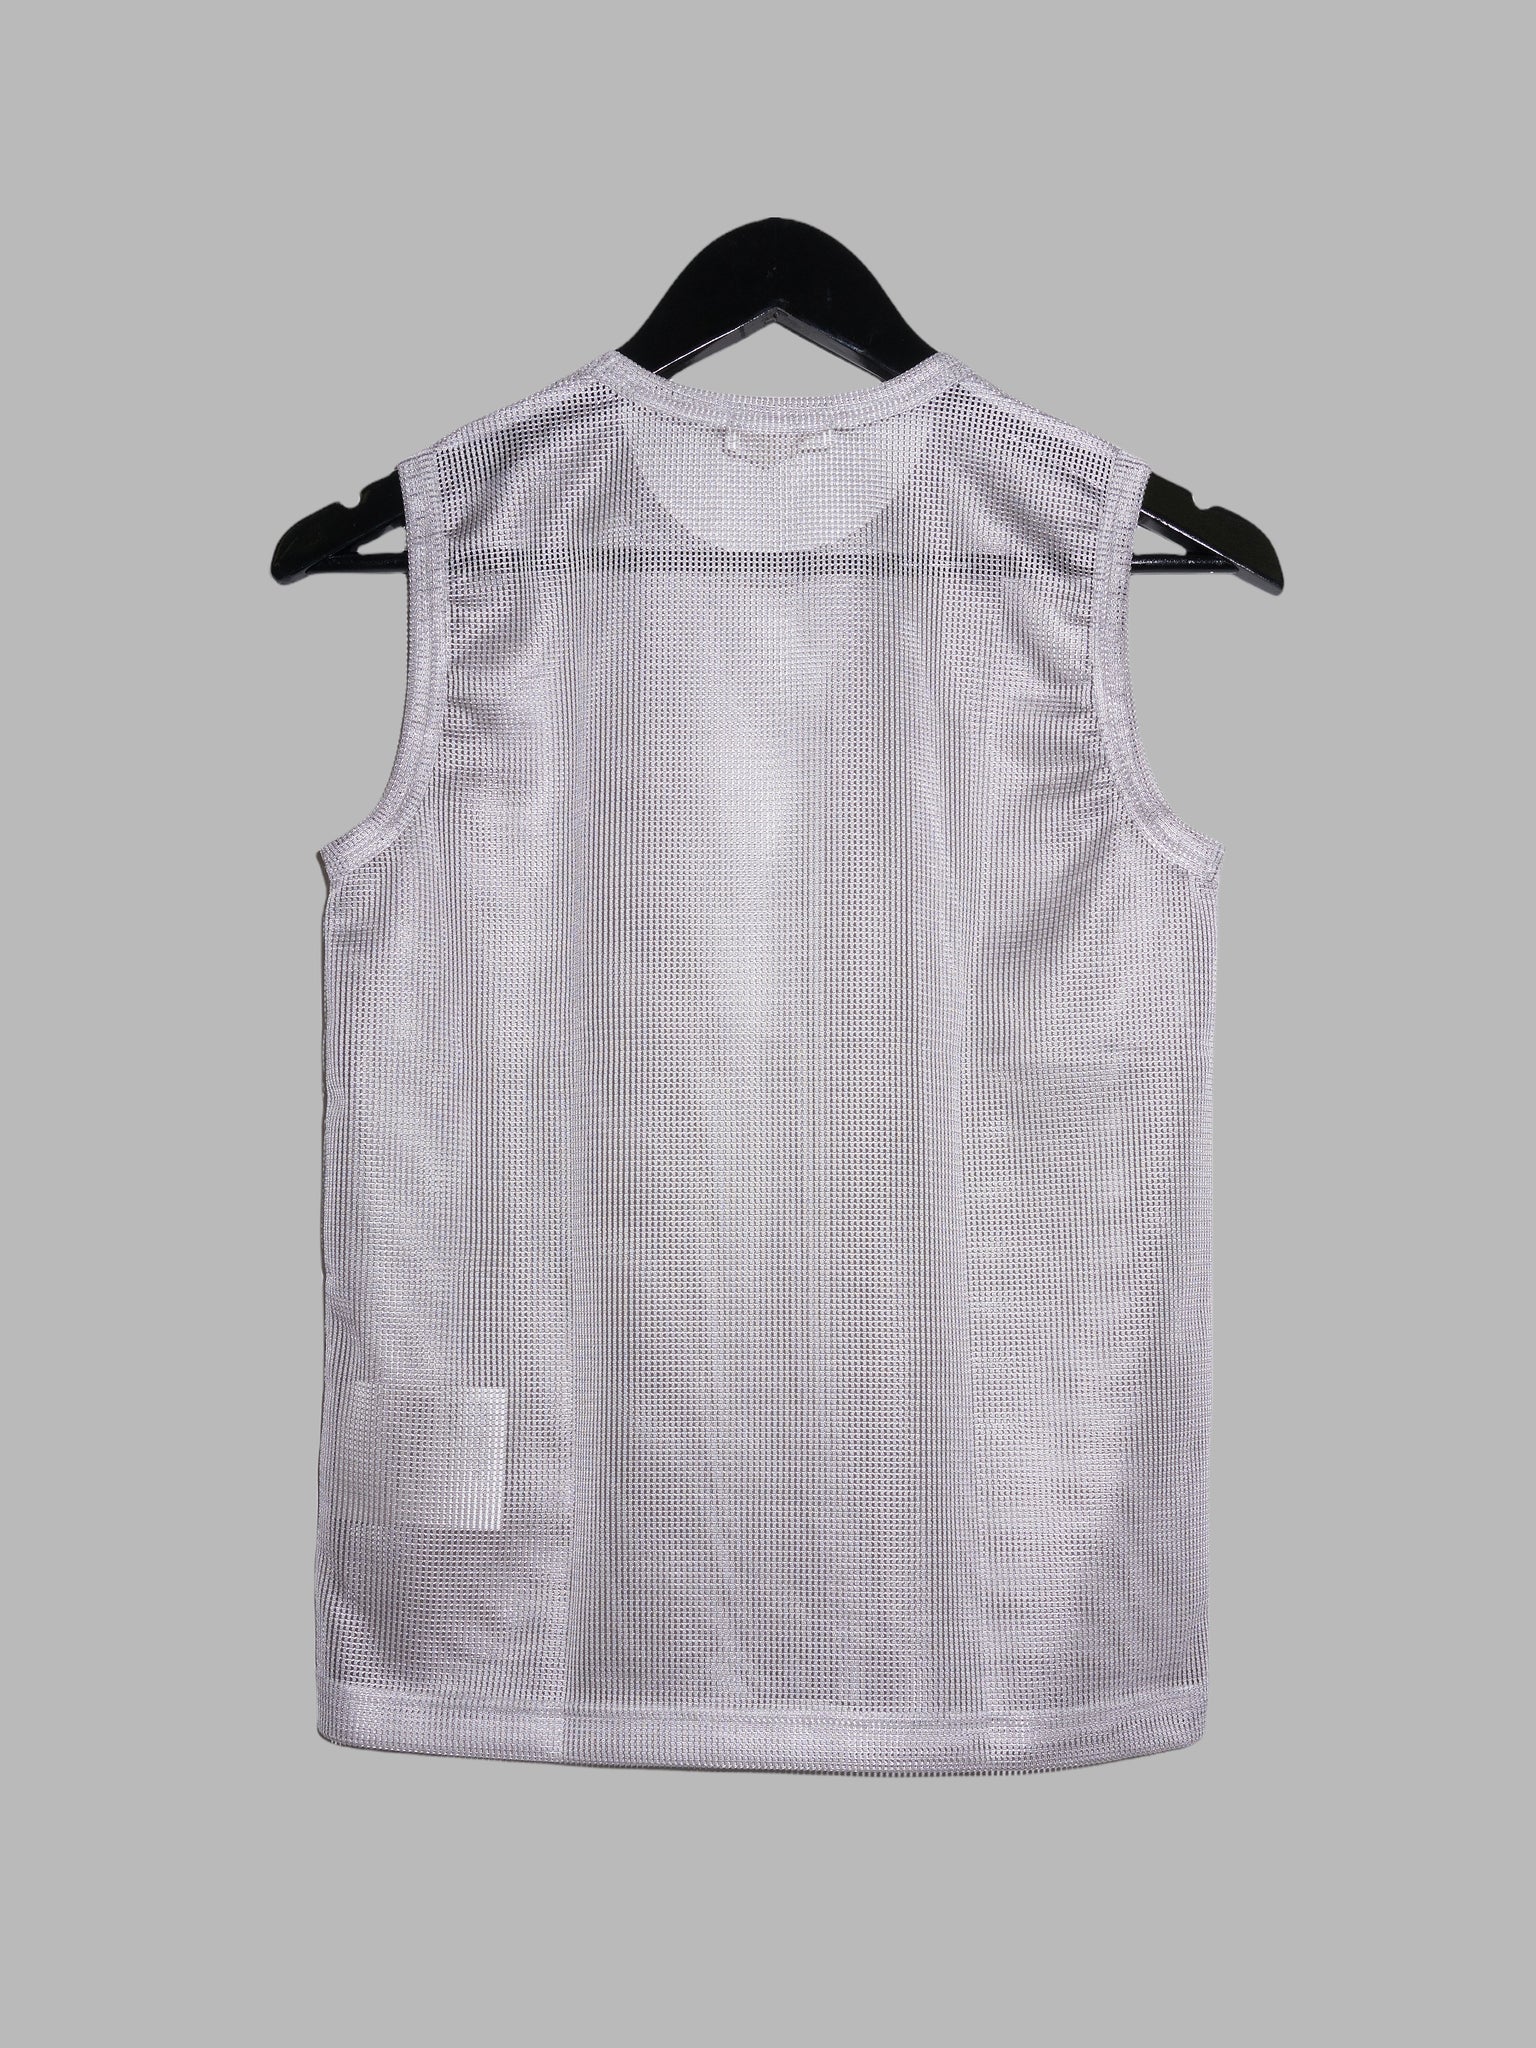 Comme des Garcons 2001 silver polyester mesh sleeveless top